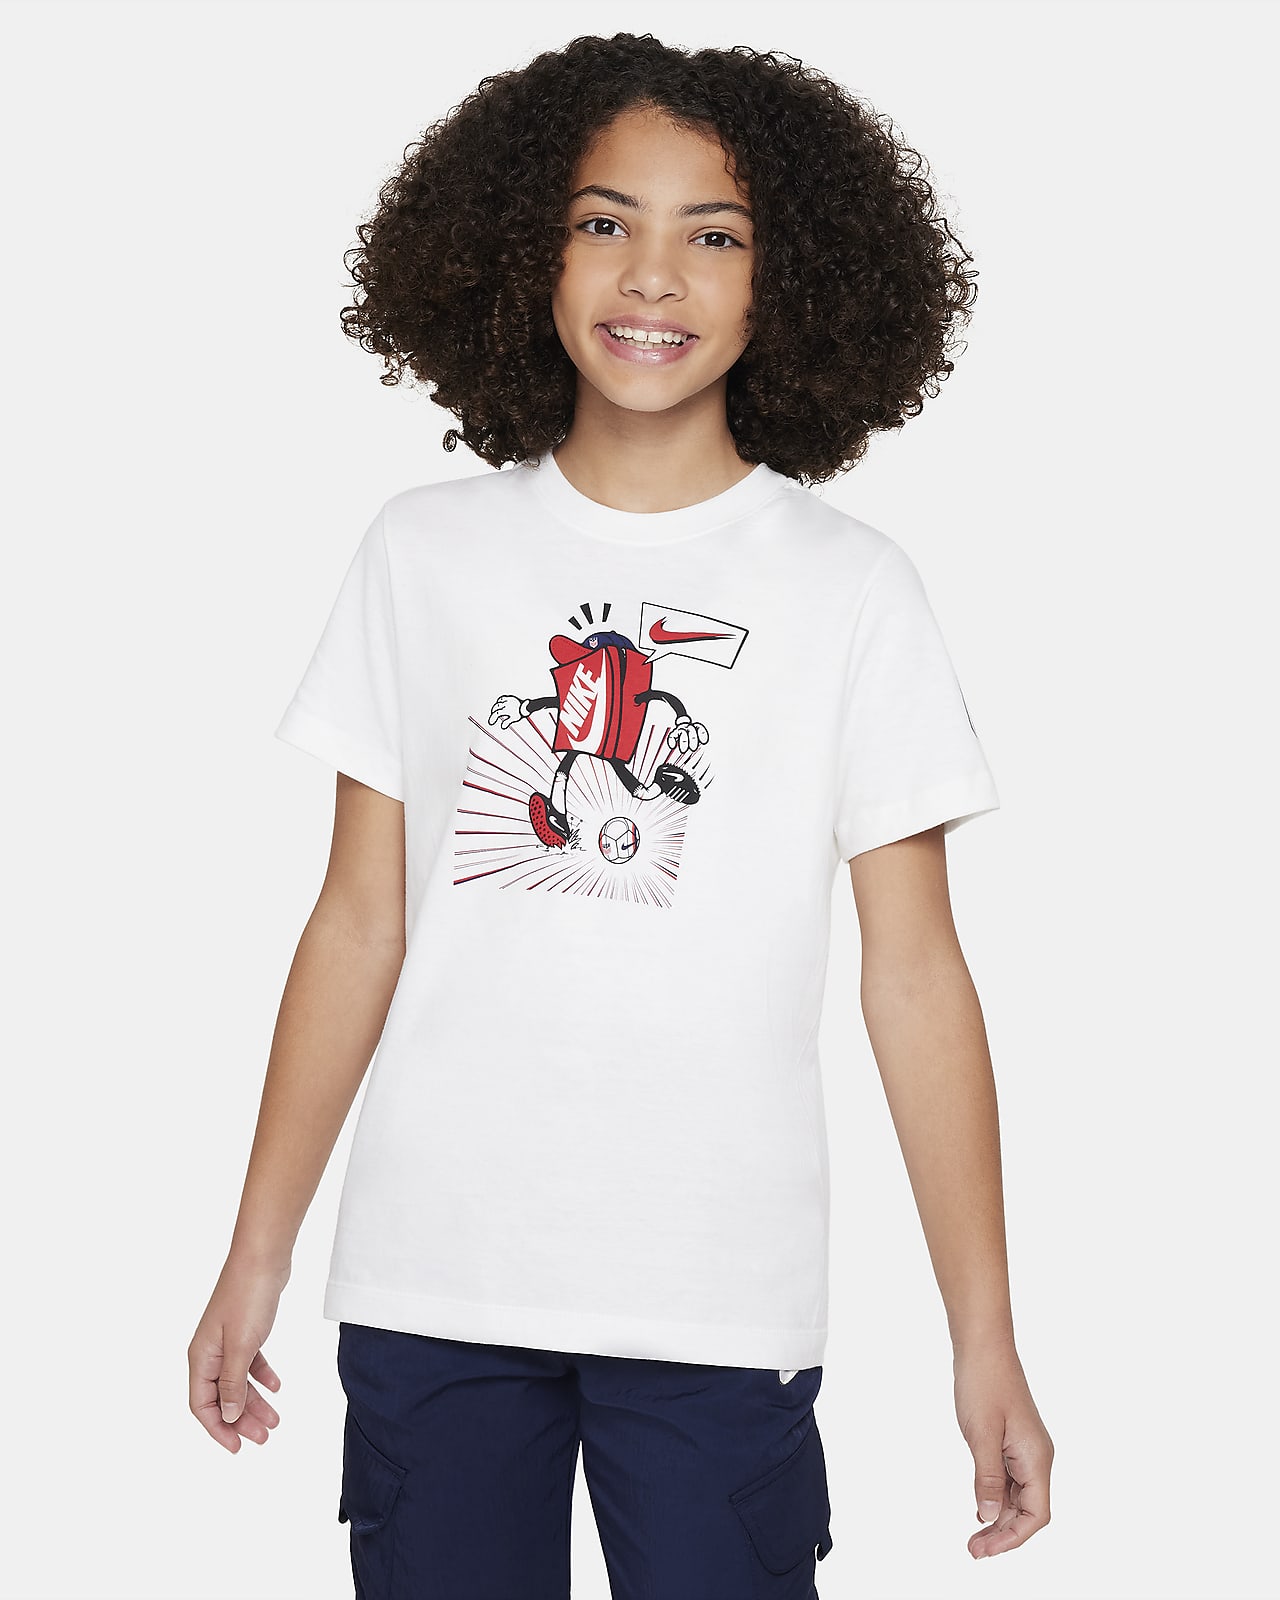 U.S. Big Kids' Nike Soccer T-Shirt